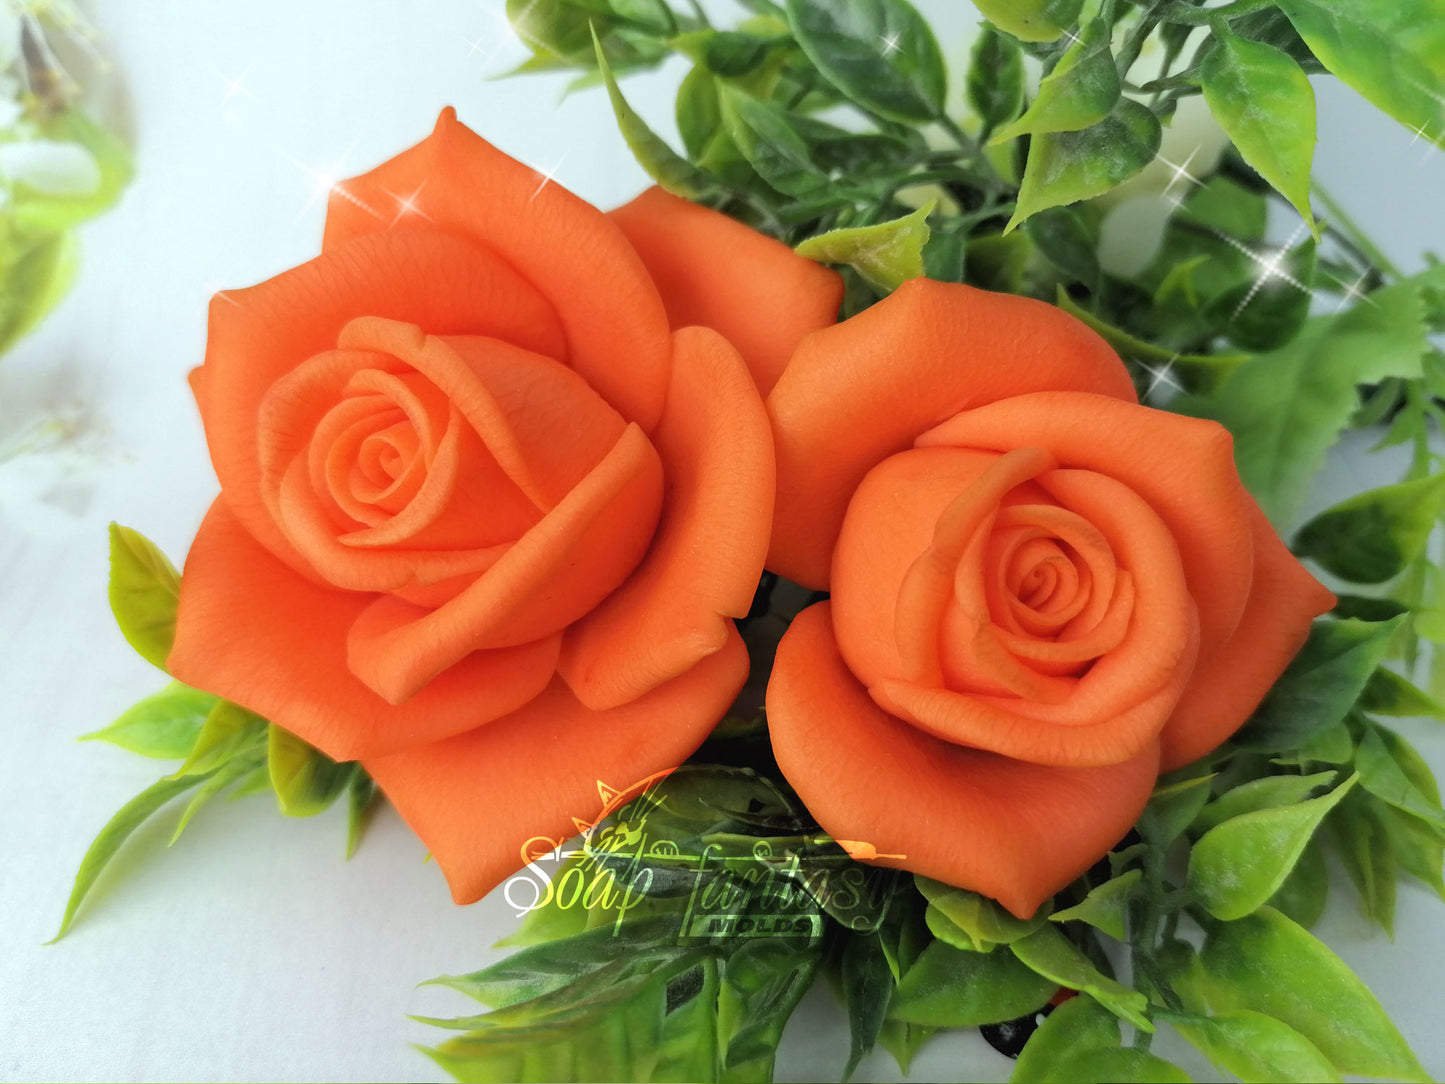 Rose "Orange juice" silicone mold for soap making